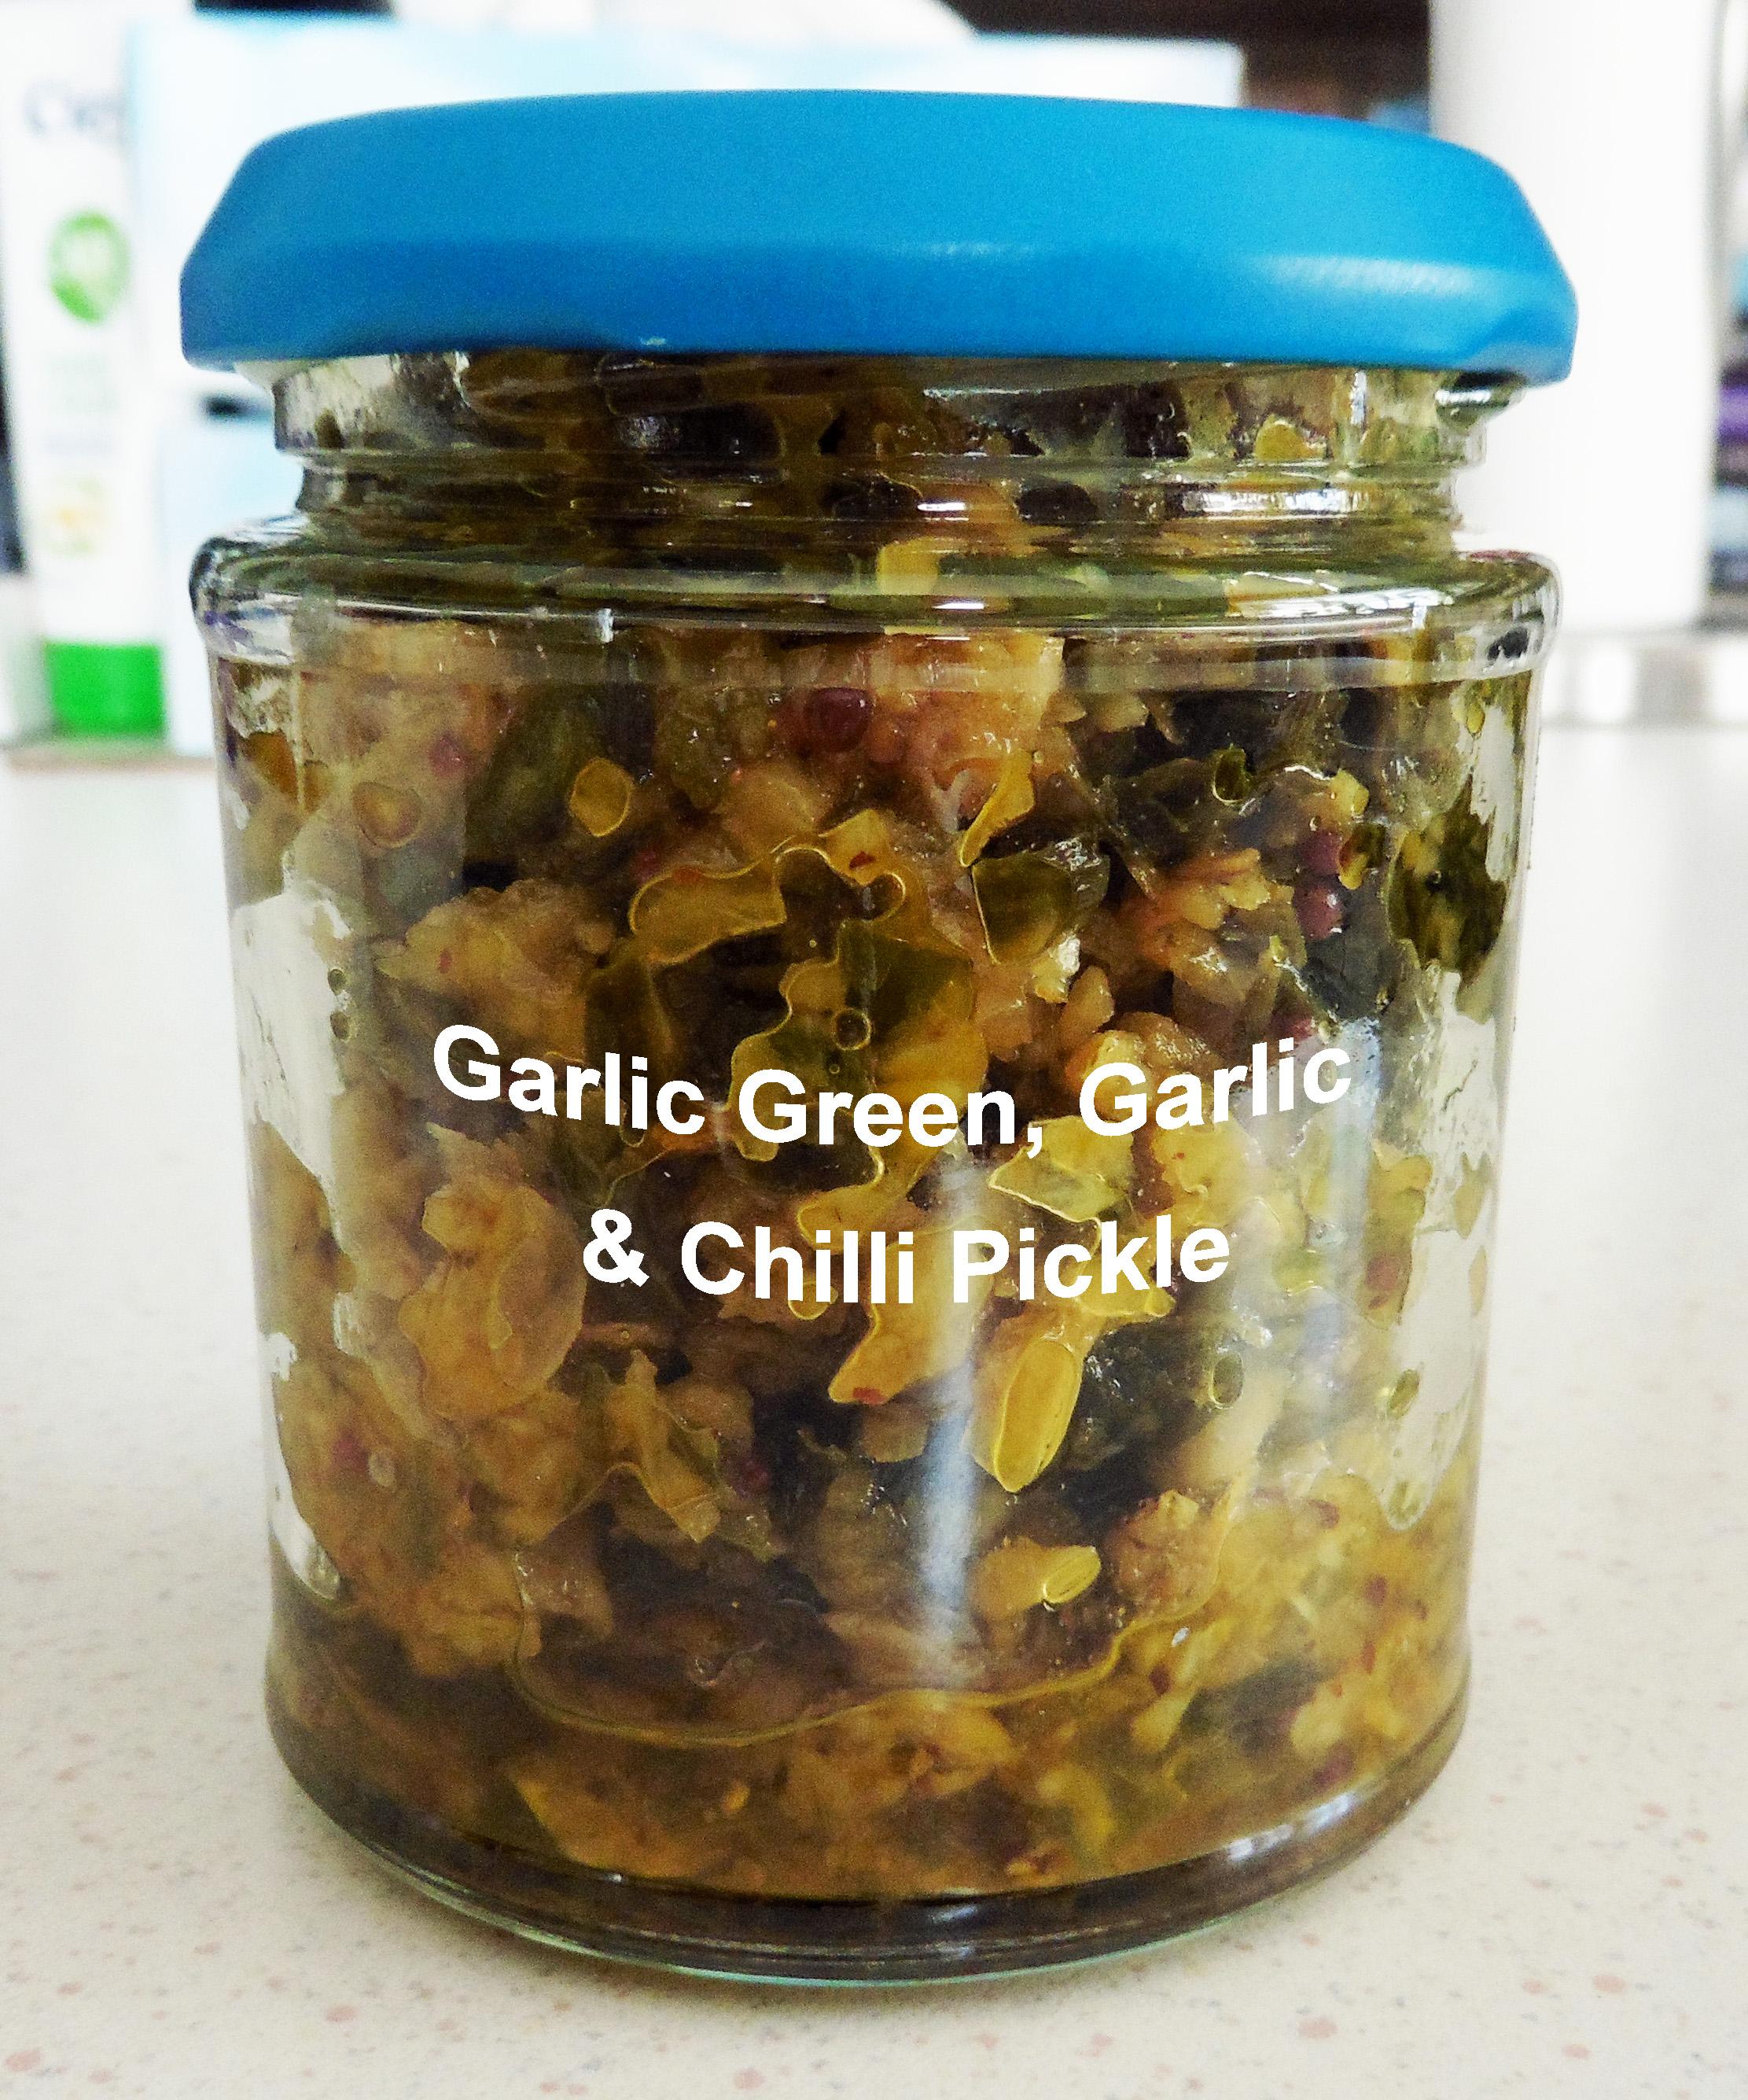 Garlic, Garlic Greens and Green Chilli Pickle